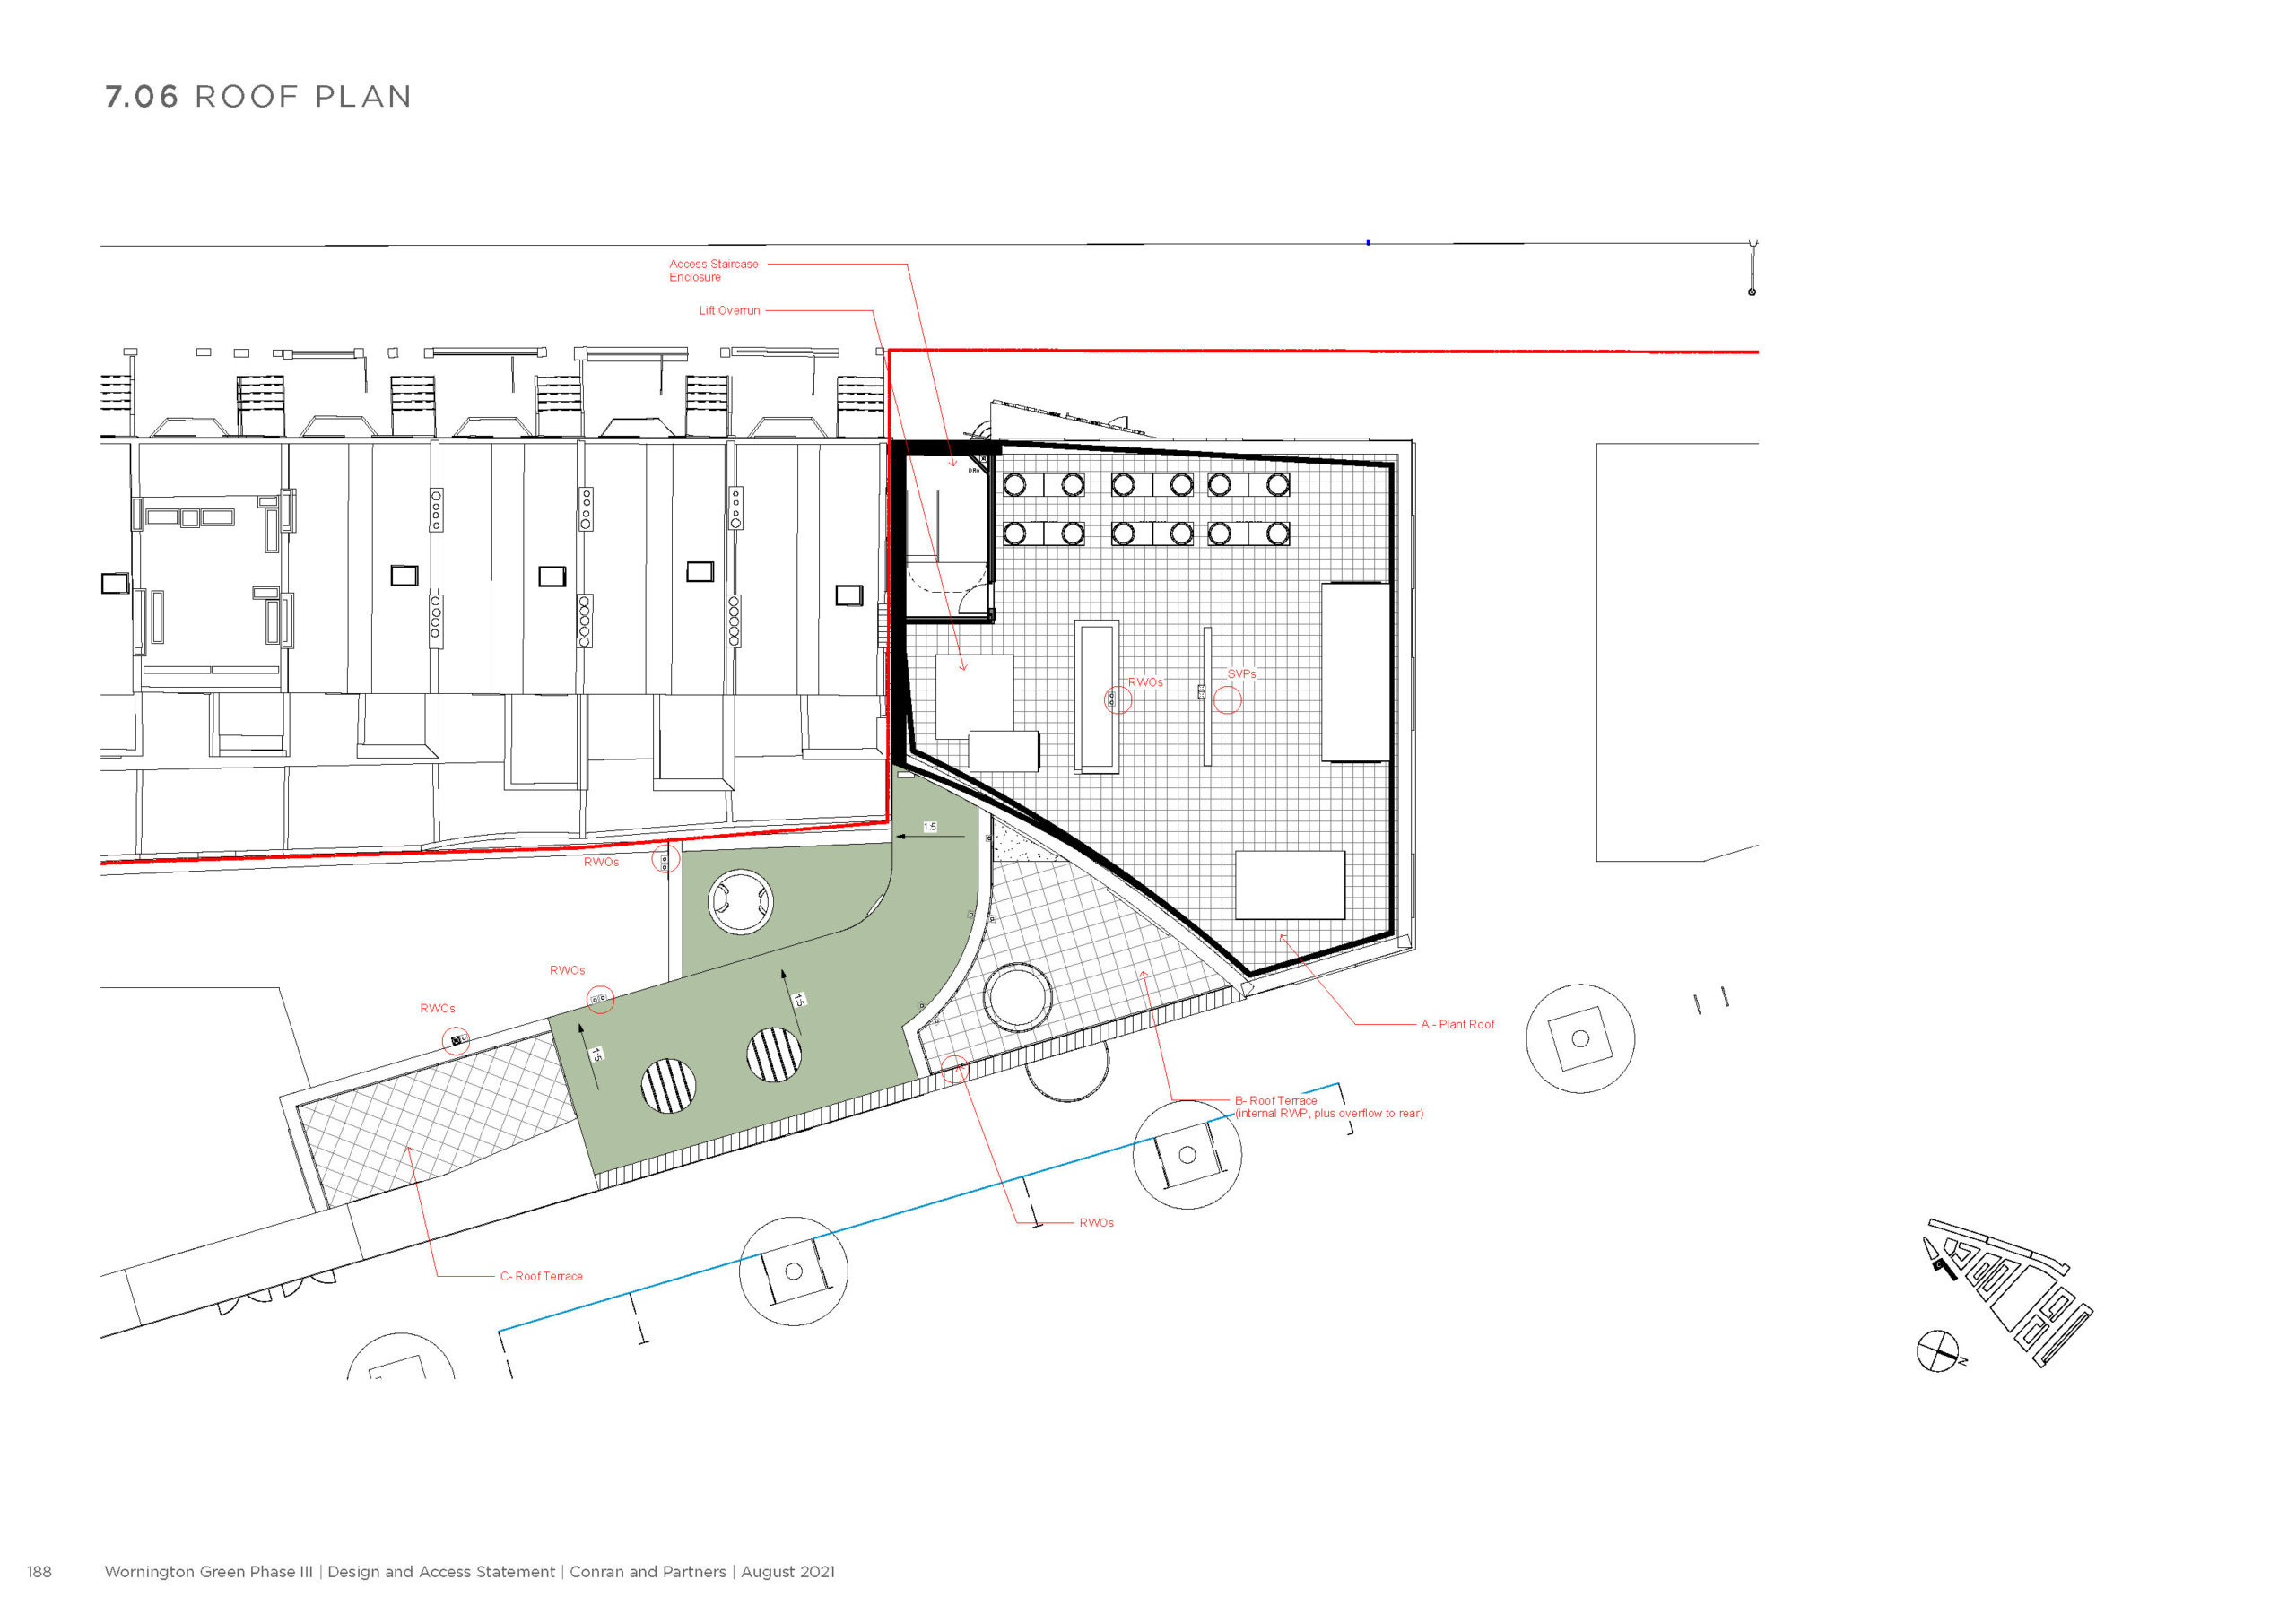 Community Centre - Roof plan